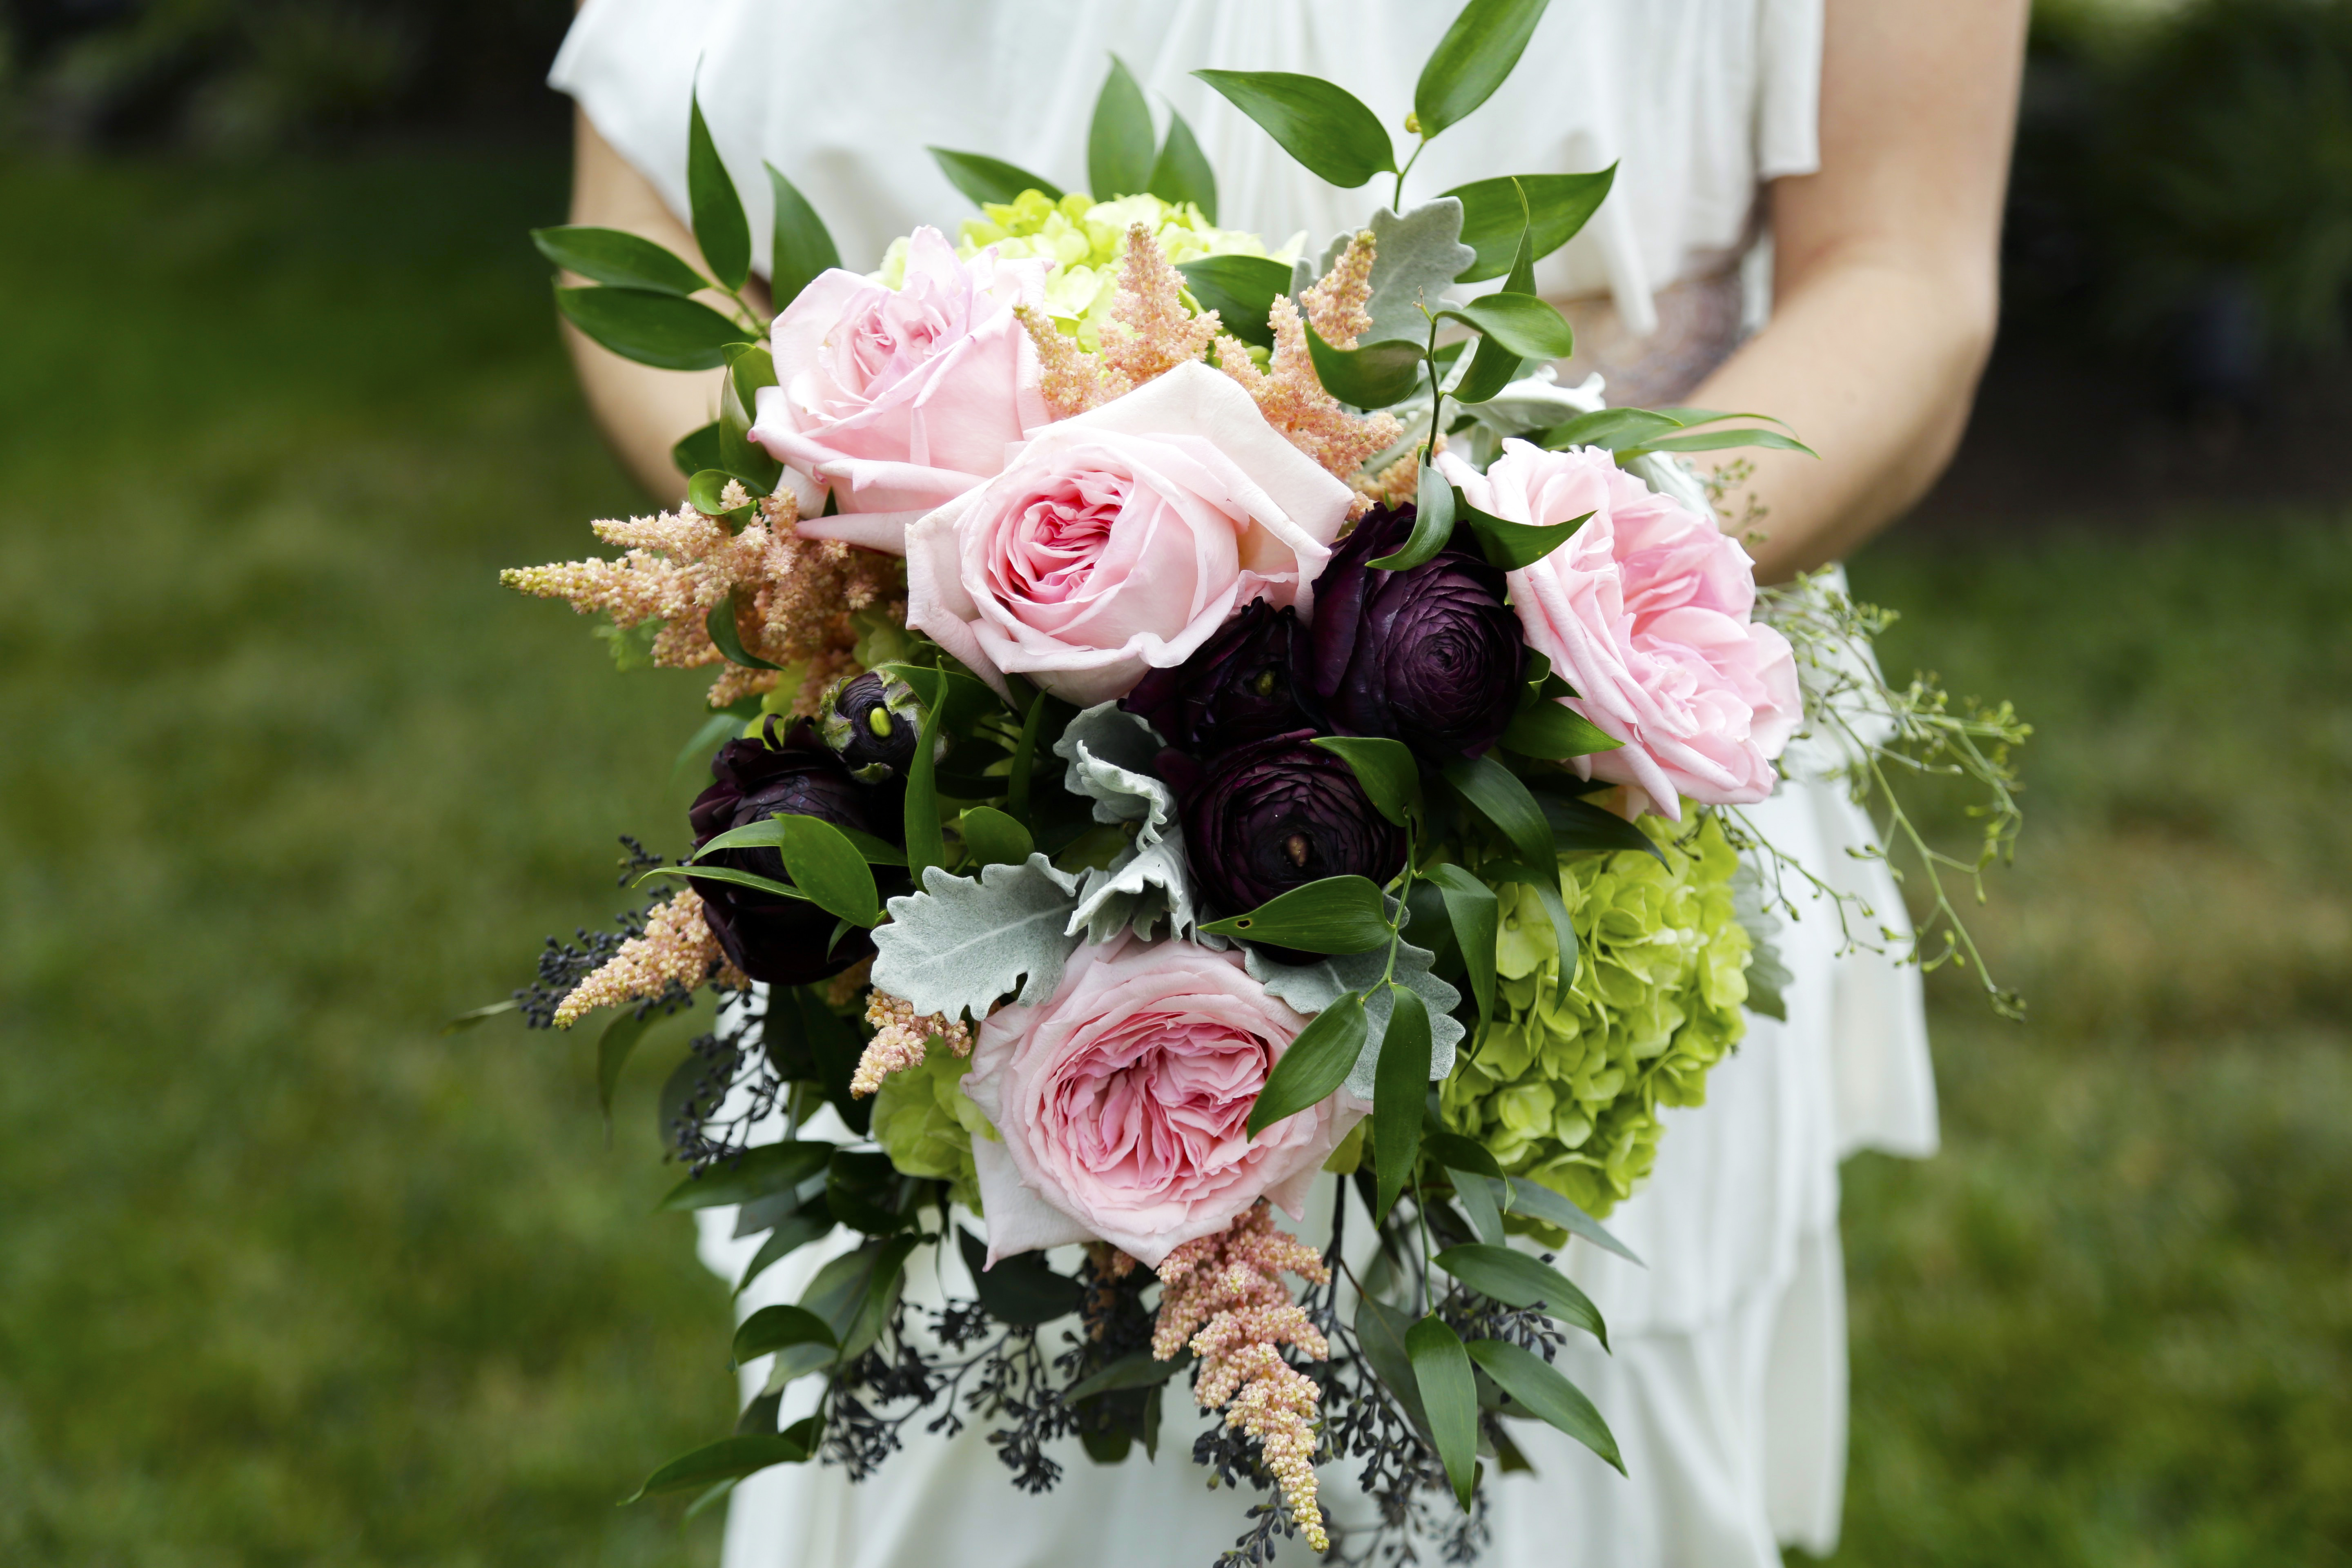 Roses Flowers With Stem Wedding Bride Bouquet Party Decor 